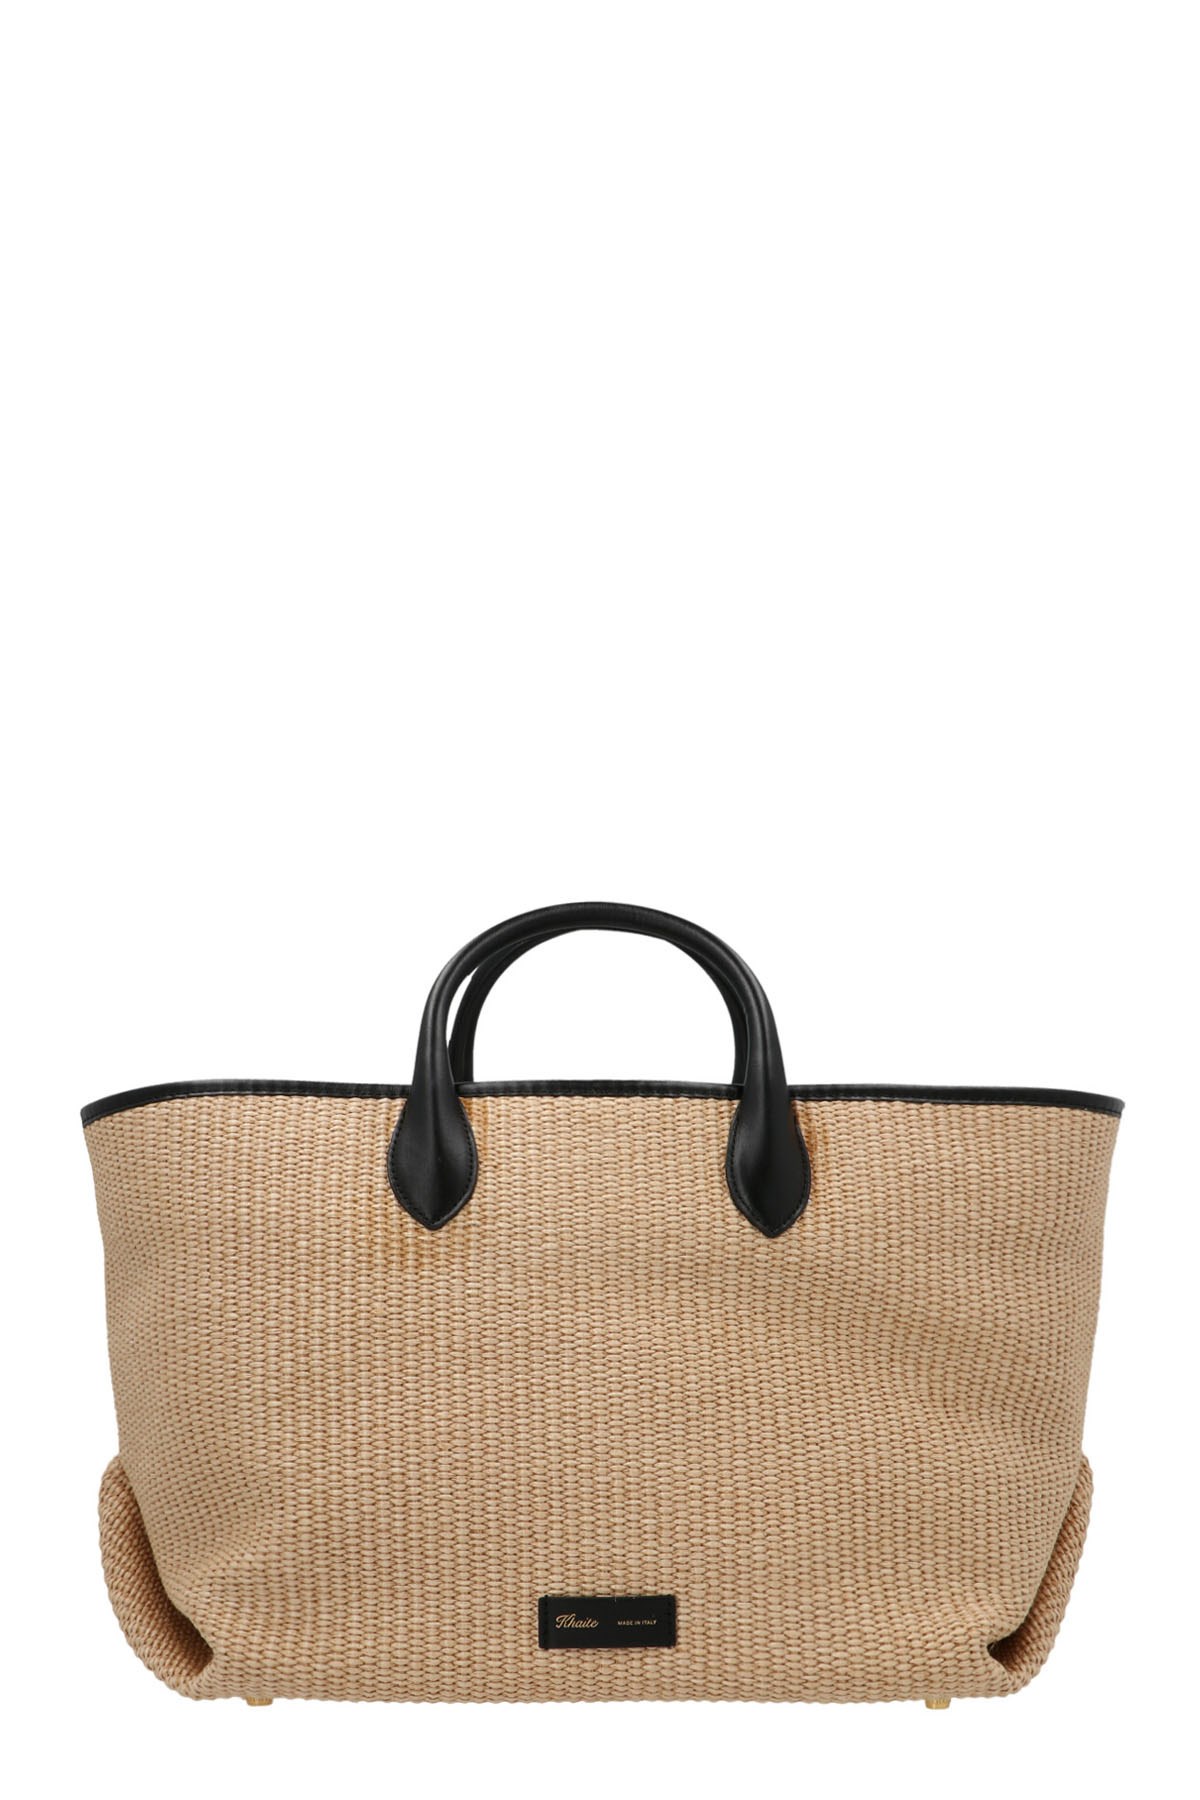 KHAITE ‘Amelia Medium’ Shopping Bag